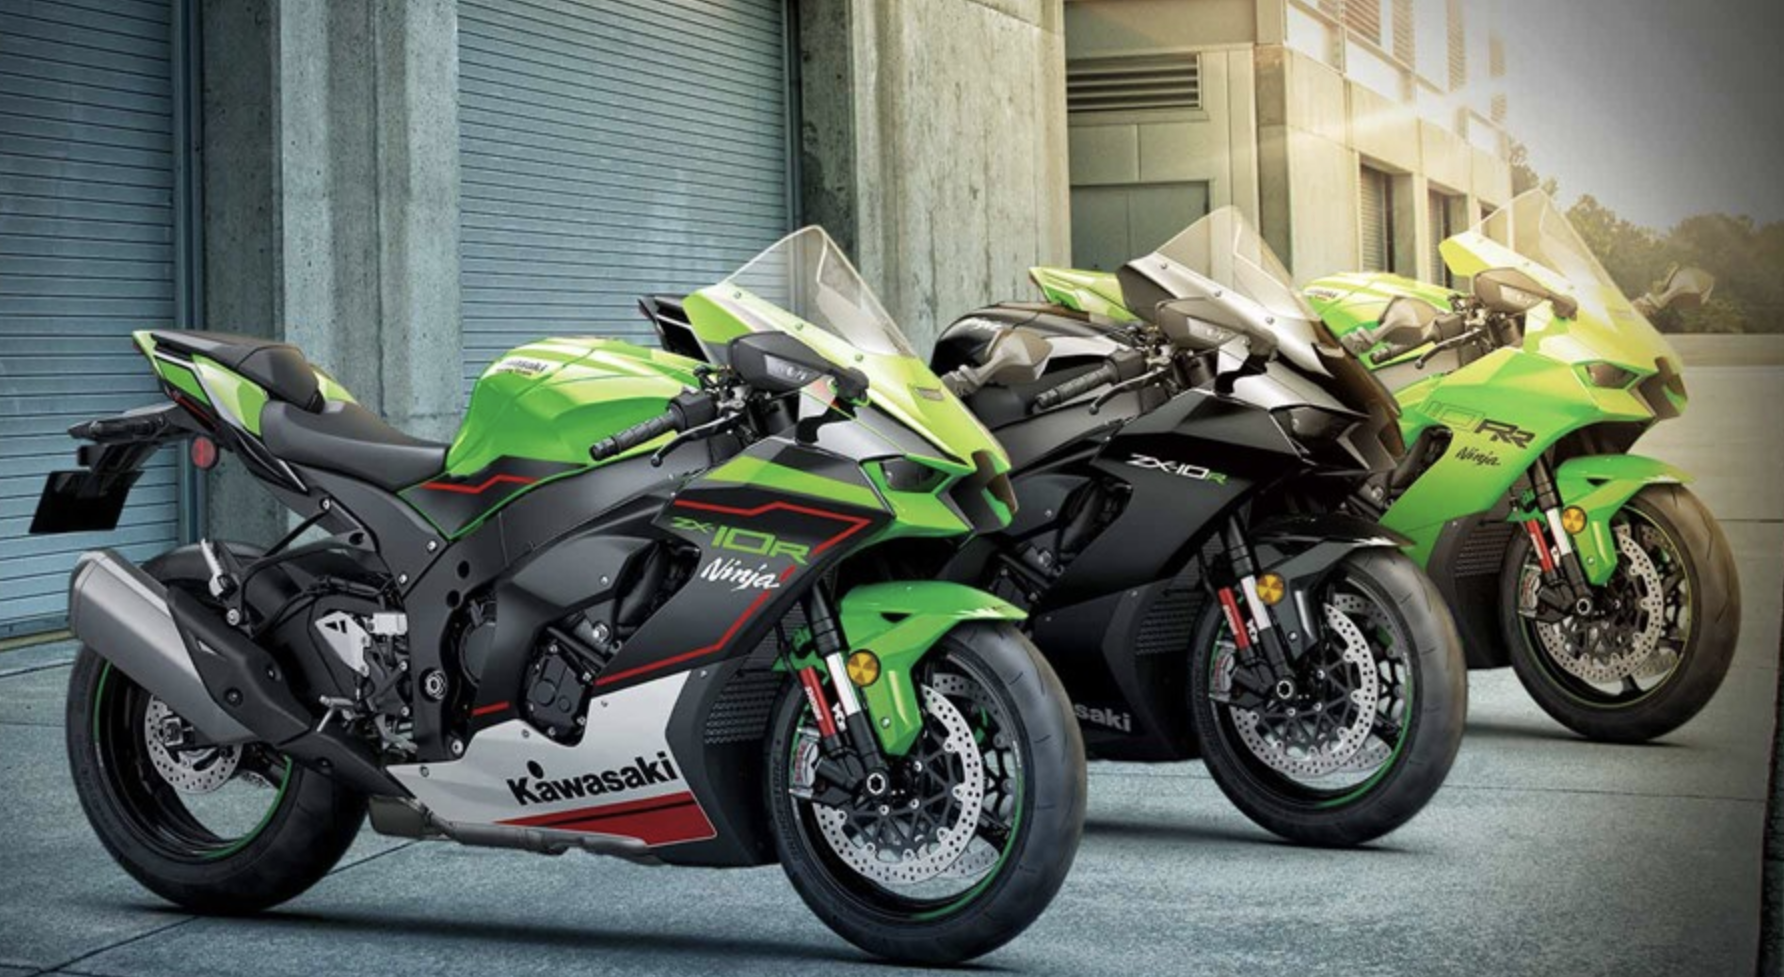 kim Virkelig En god ven 2021 Kawasaki Ninja ZX-10R & ZX-10RR superbike revealed | Shifting-Gears